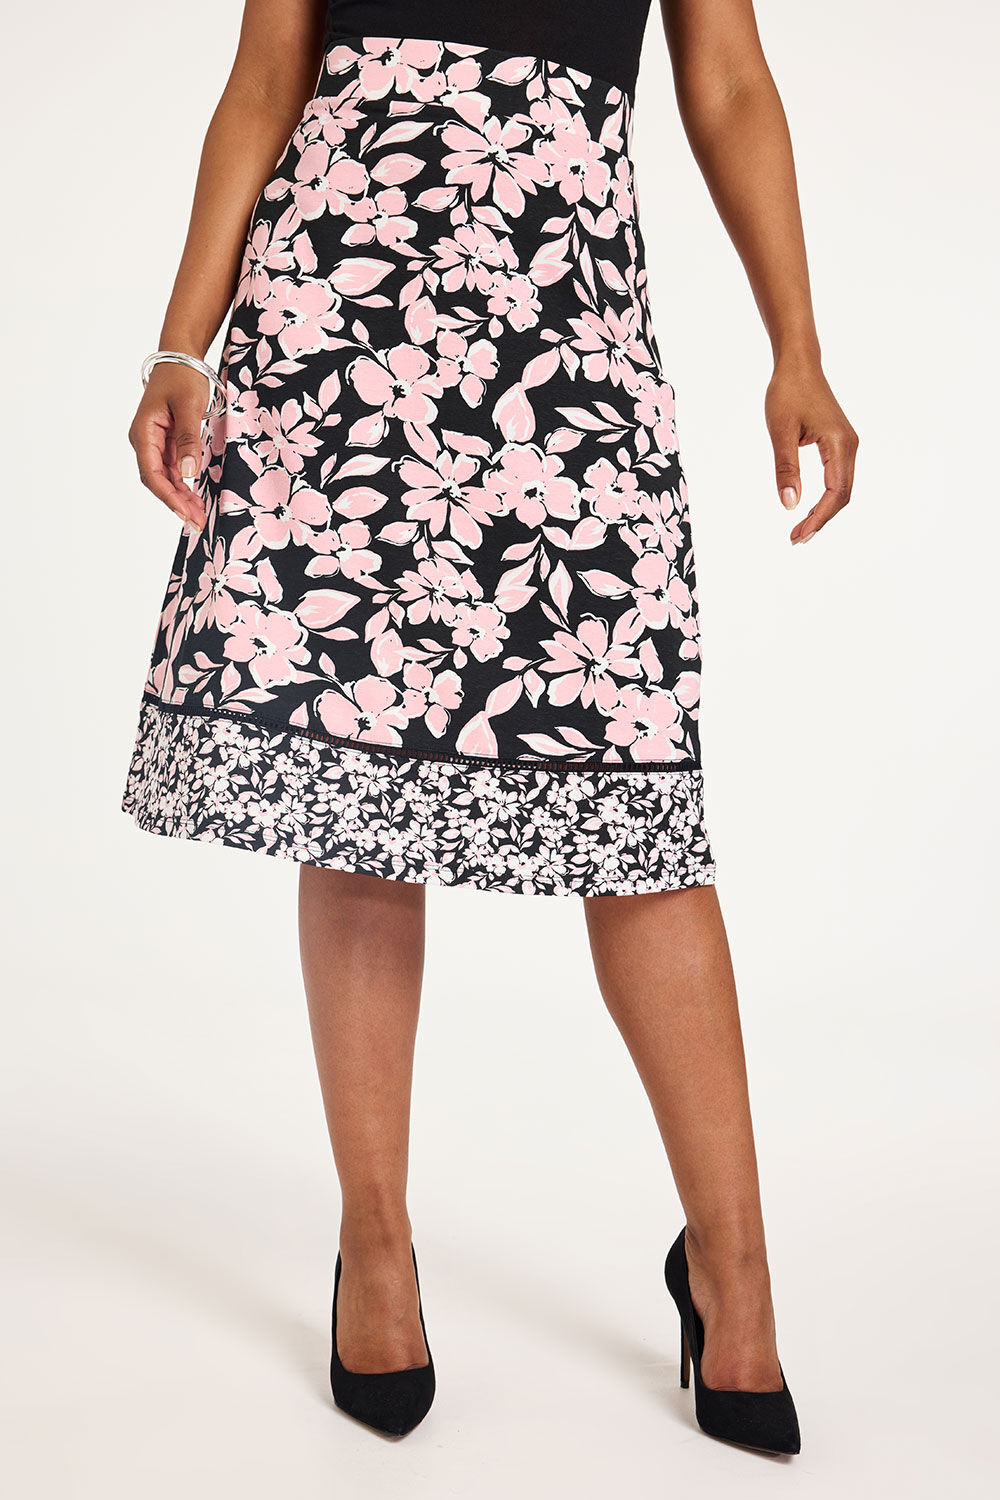 Bonmarche Black Floral Border Print A-Line Jersey Skirt, Size: 16